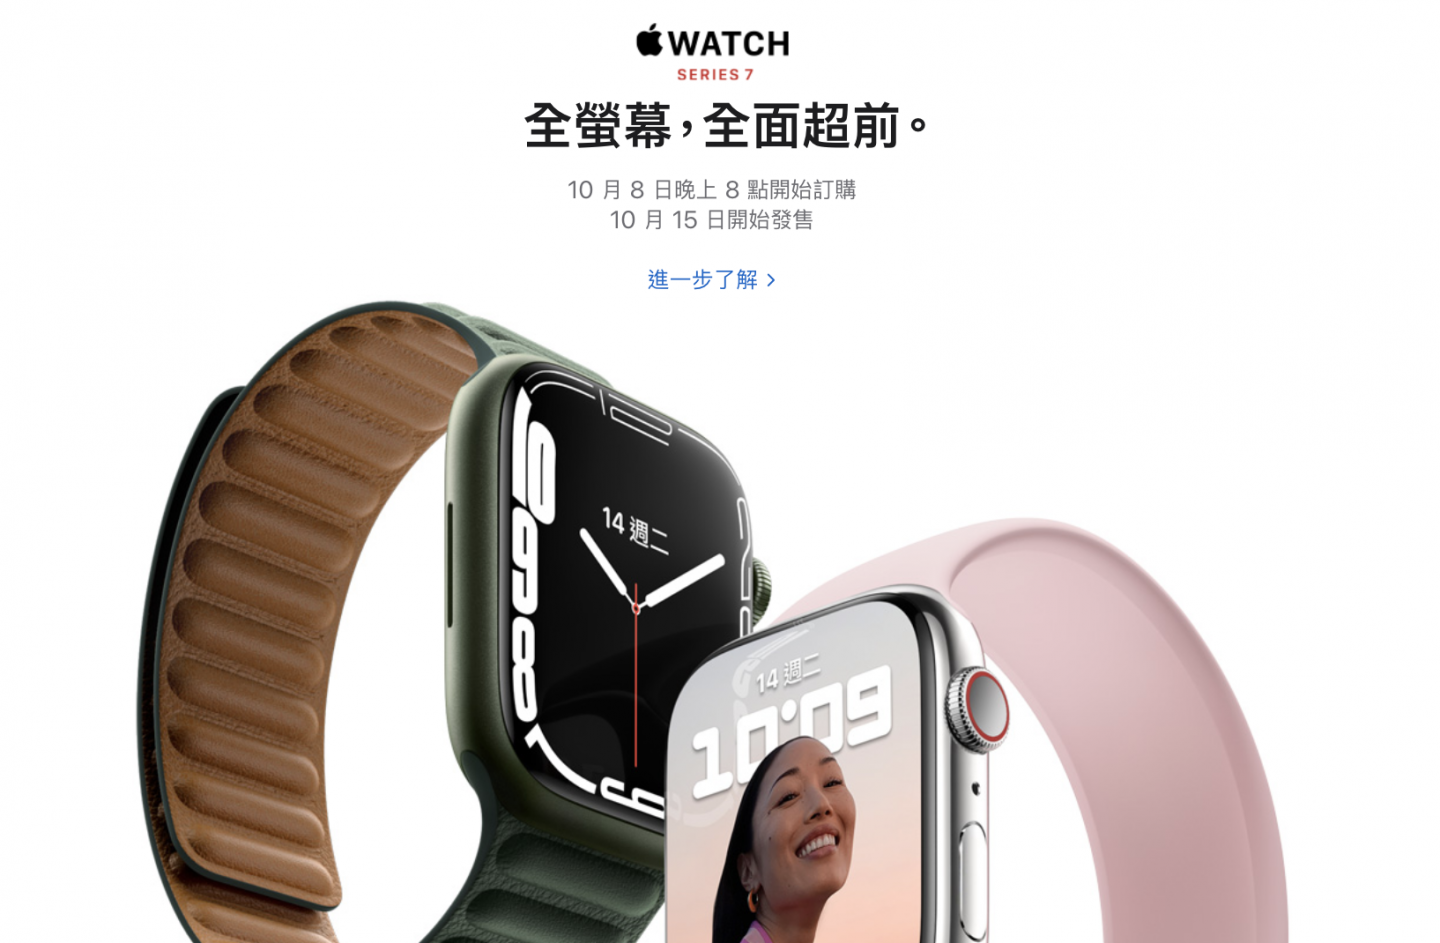 Apple Watch Series 7 將於 10 /8 開放預購、10/15 上市，售價 11,900 元起